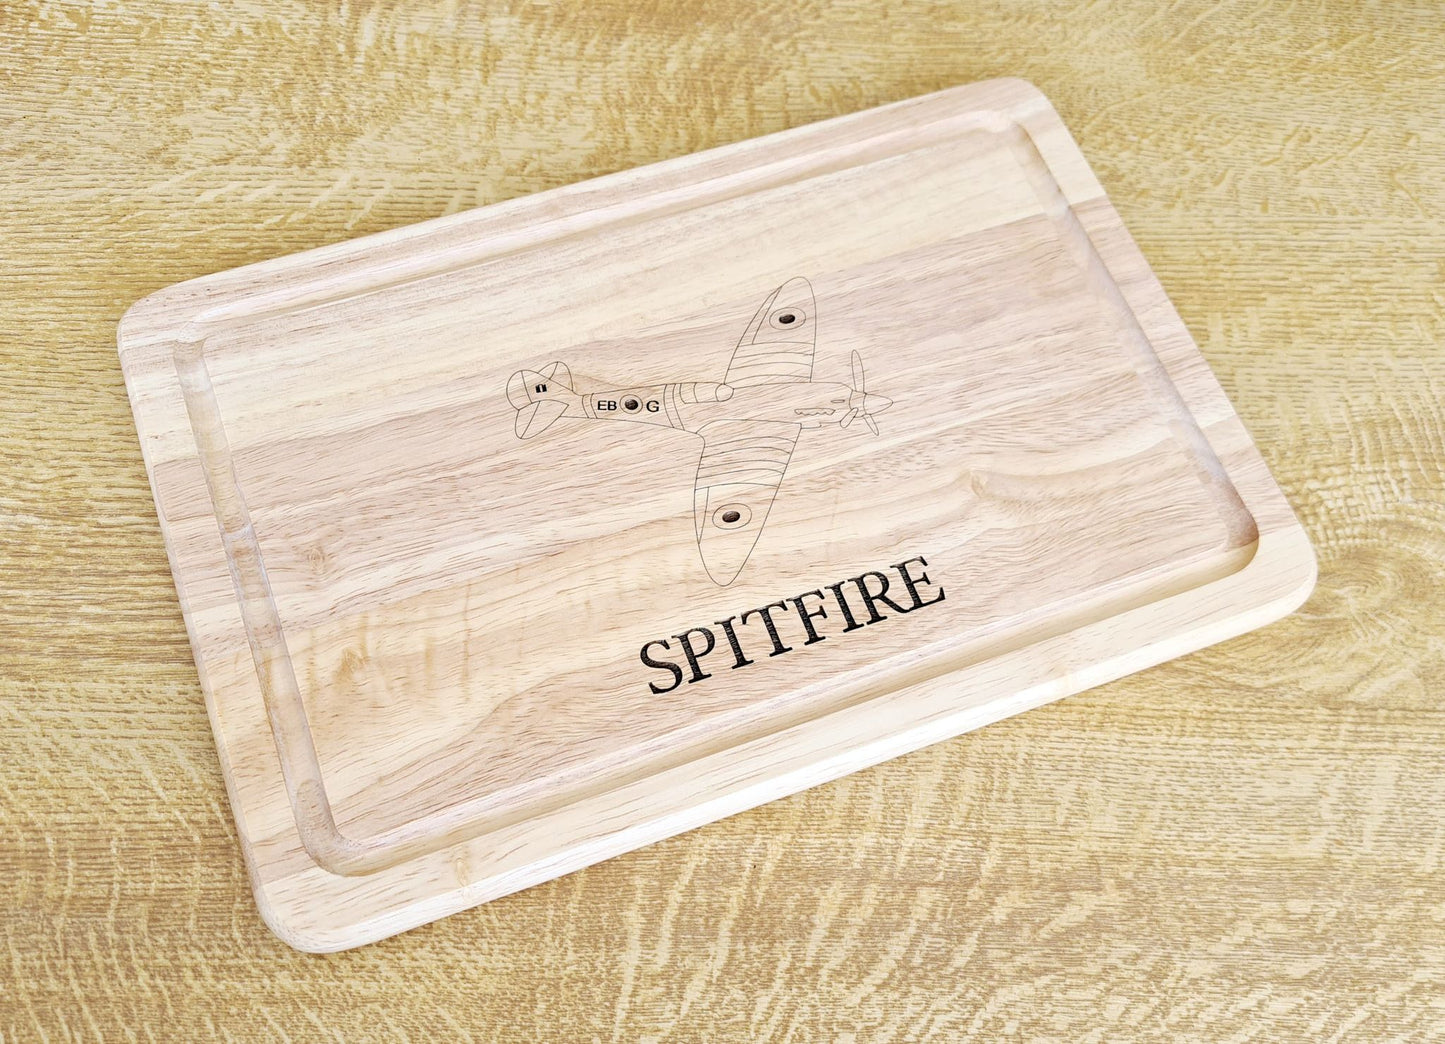 Spitfire Choppingboard